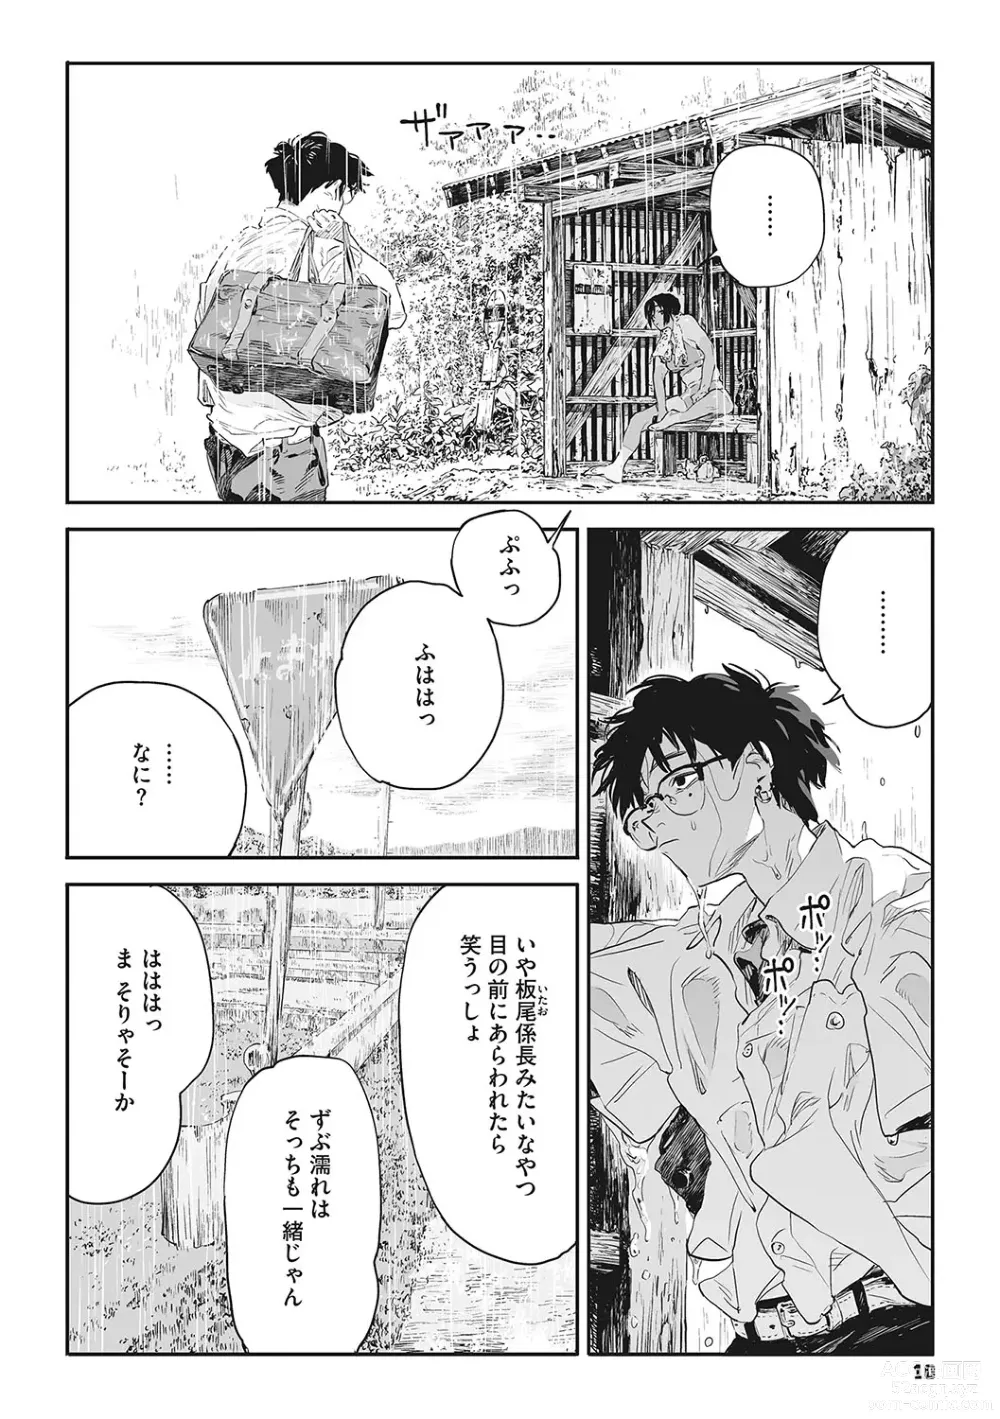 Page 9 of manga Ito o Yoru